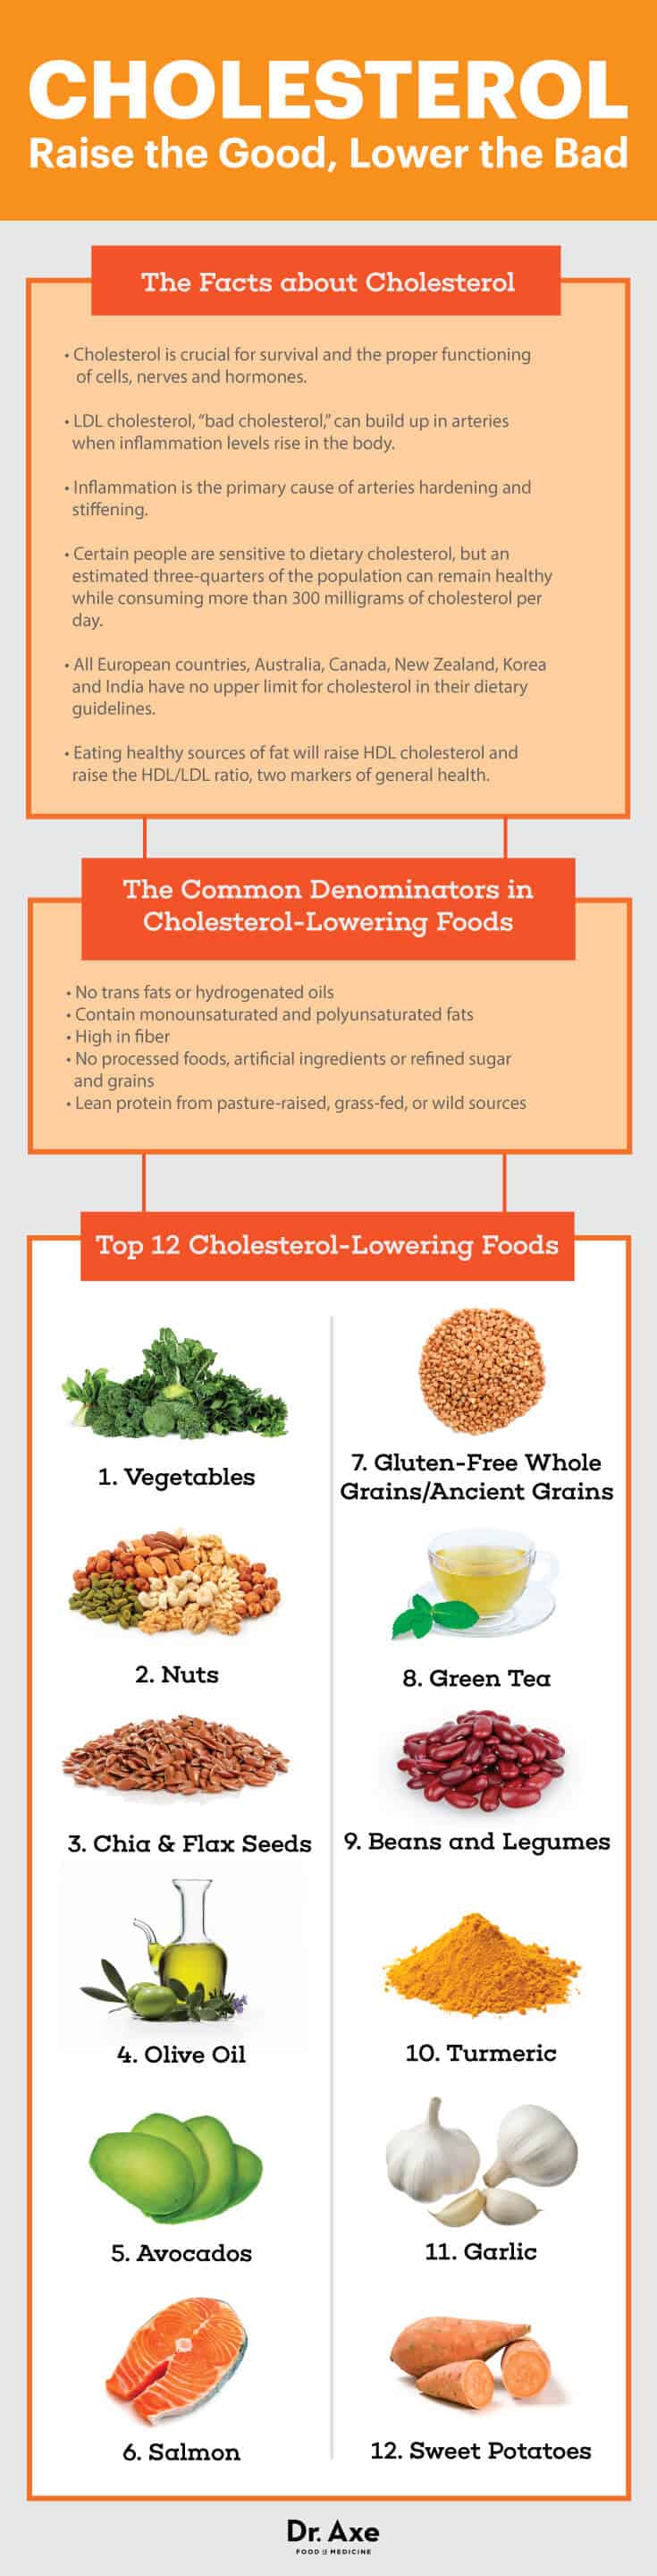 cholesterol-lowering-foods-chart